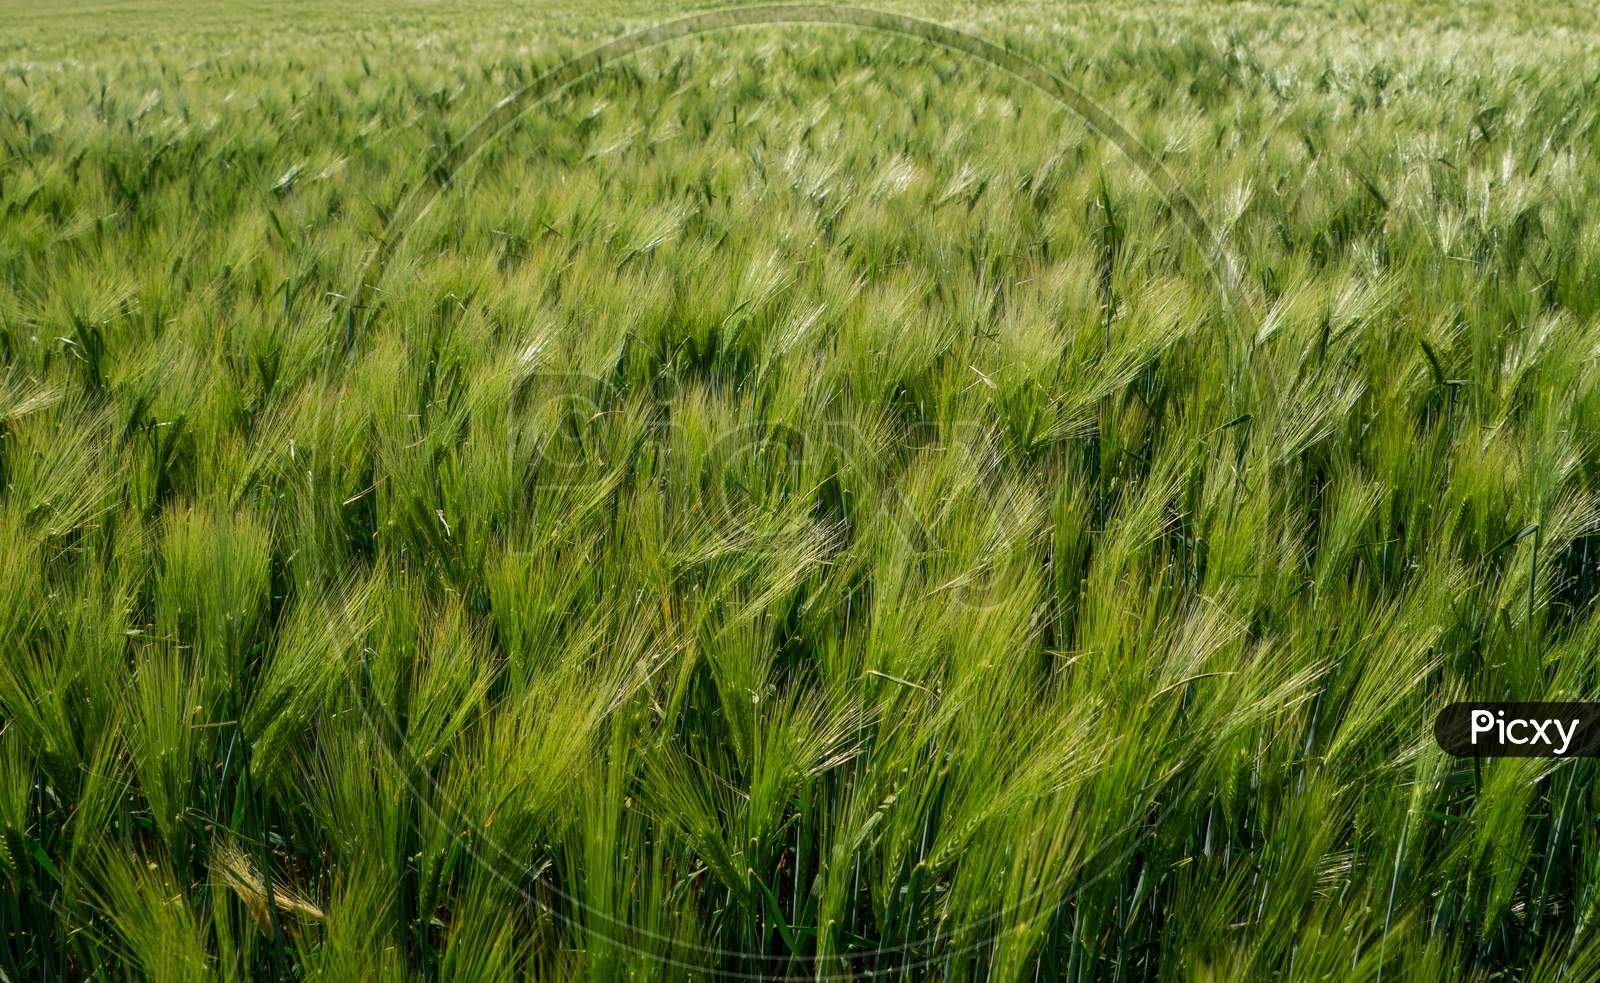 Barley Fields ,Barley Grain Is Used For Flour, Barley Bread, Barley Beer, Some Whiskeys, Some Vodkas, And Animal Fodder